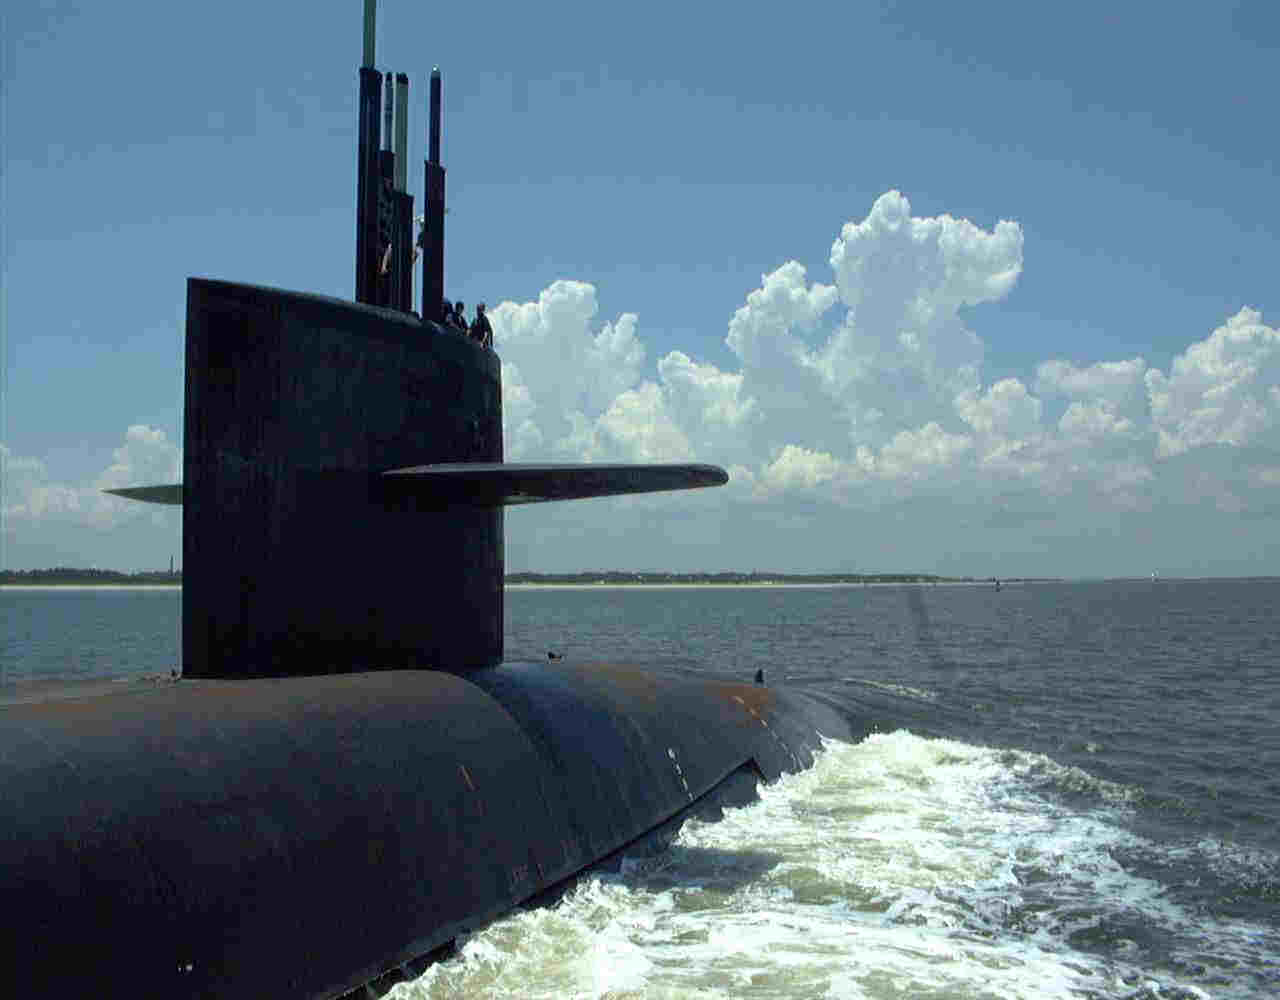 Submarine underway